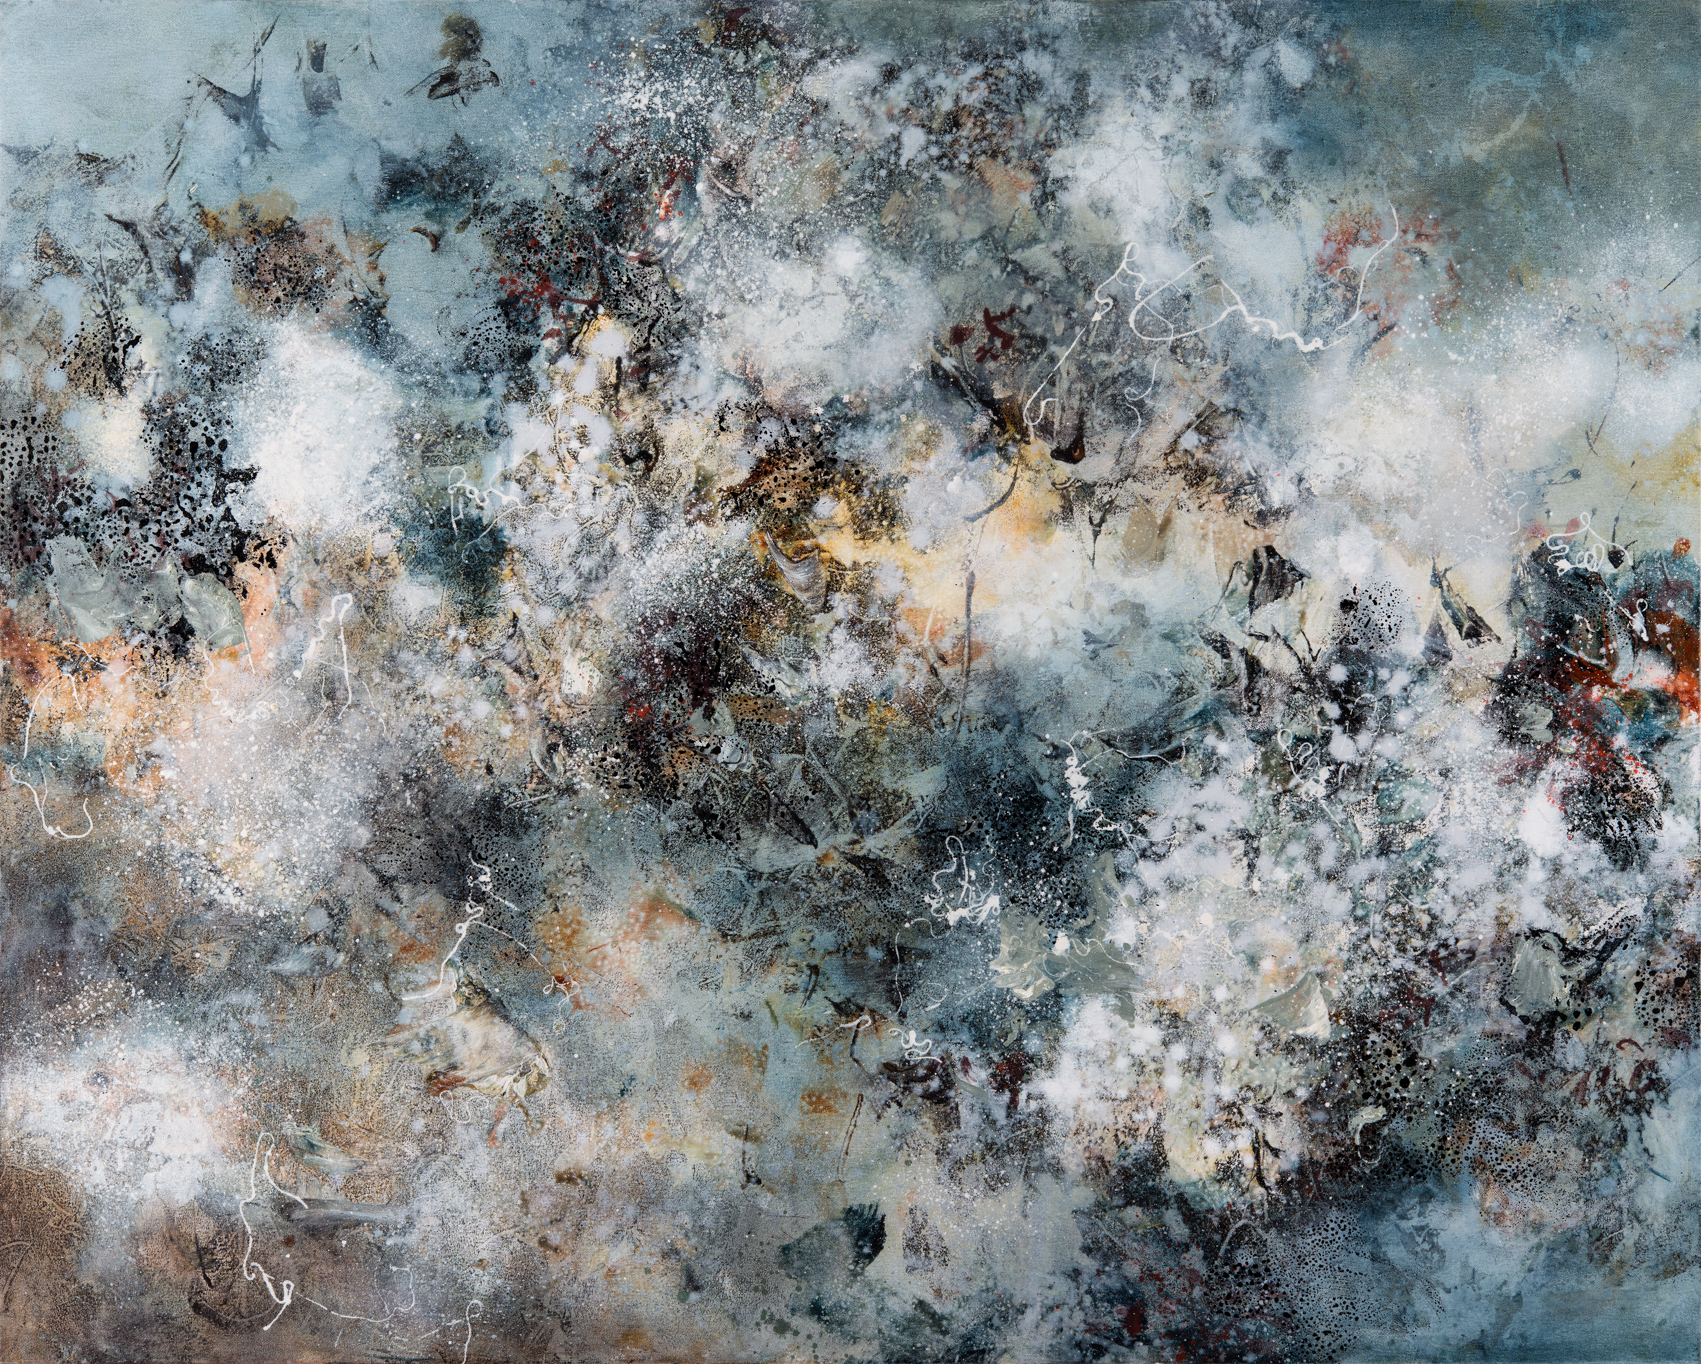 01_IoneParkinRWA,Turbulence,oil on canvas,102x127cm.jpg